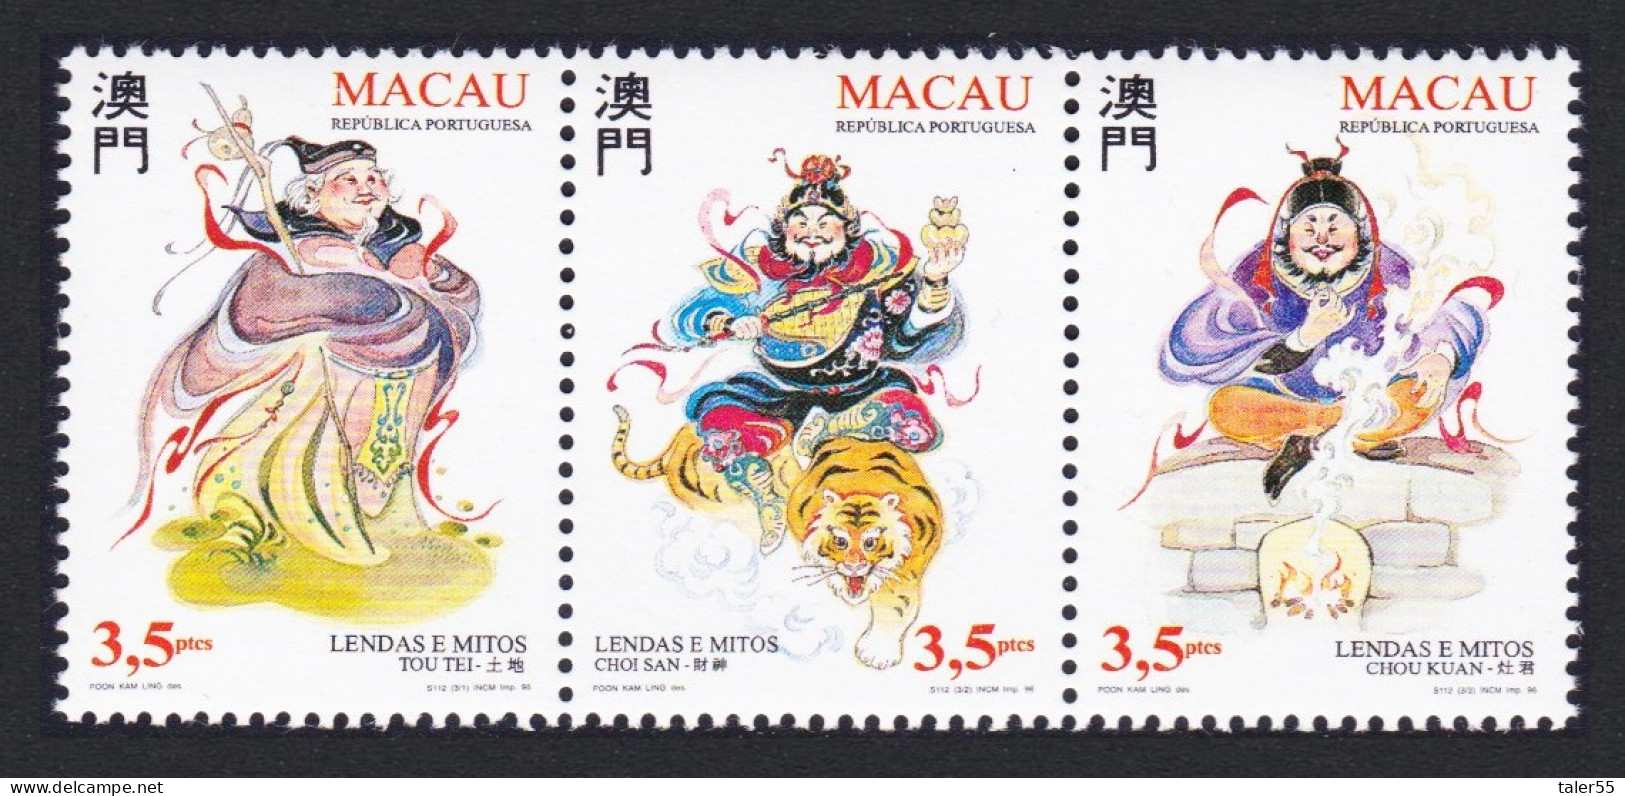 Macao Macau Legends And Myths 3rd Series Strip Of 3v 1996 MNH SG#930-932 Sc#819a - Neufs